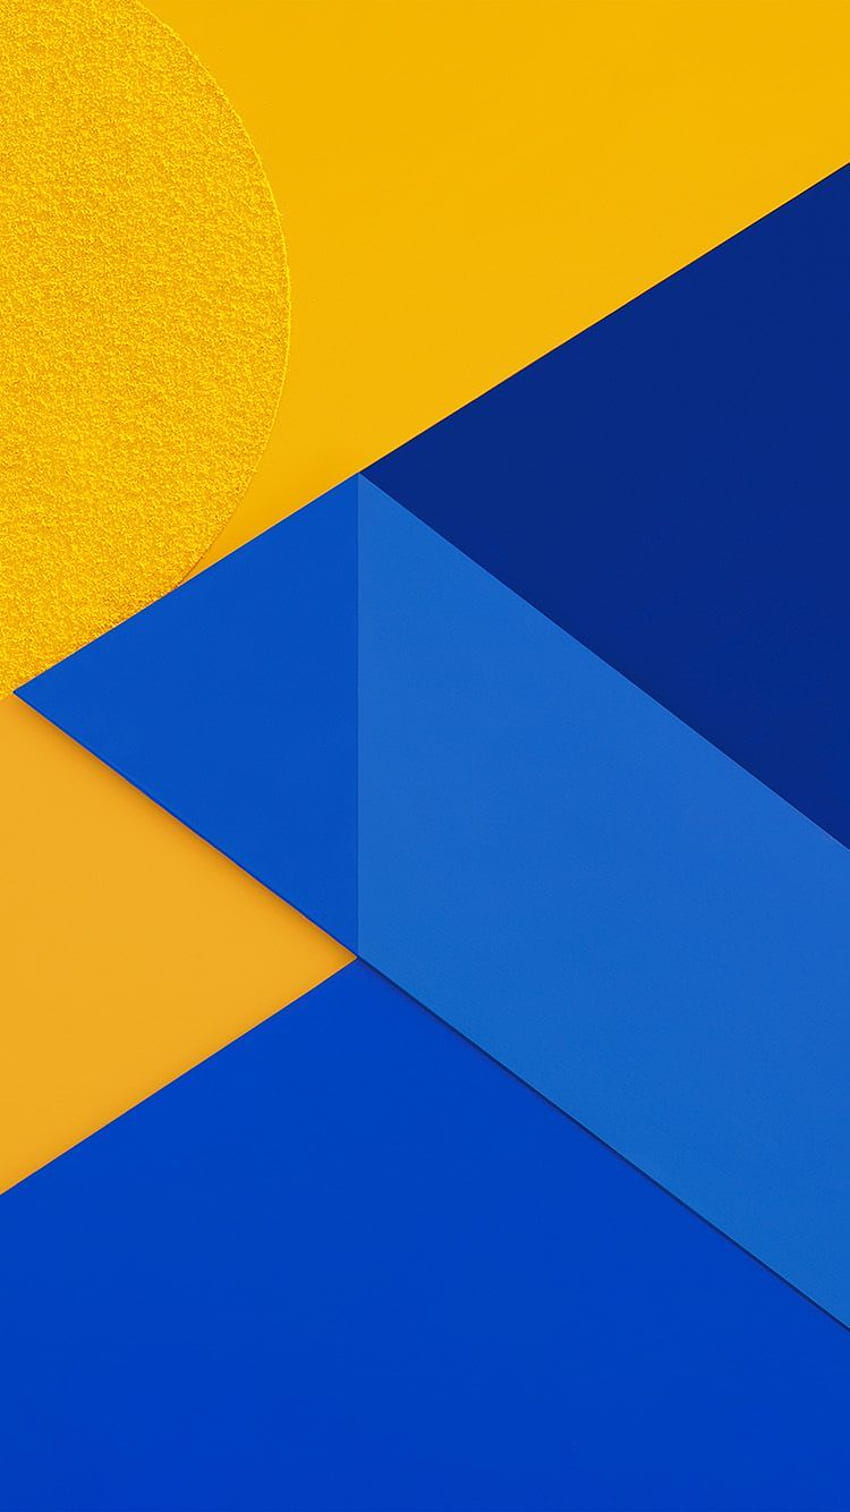 Android Marshmallow Pola Baru Biru Kuning, Biru Angkatan Laut dan Kuning wallpaper ponsel HD